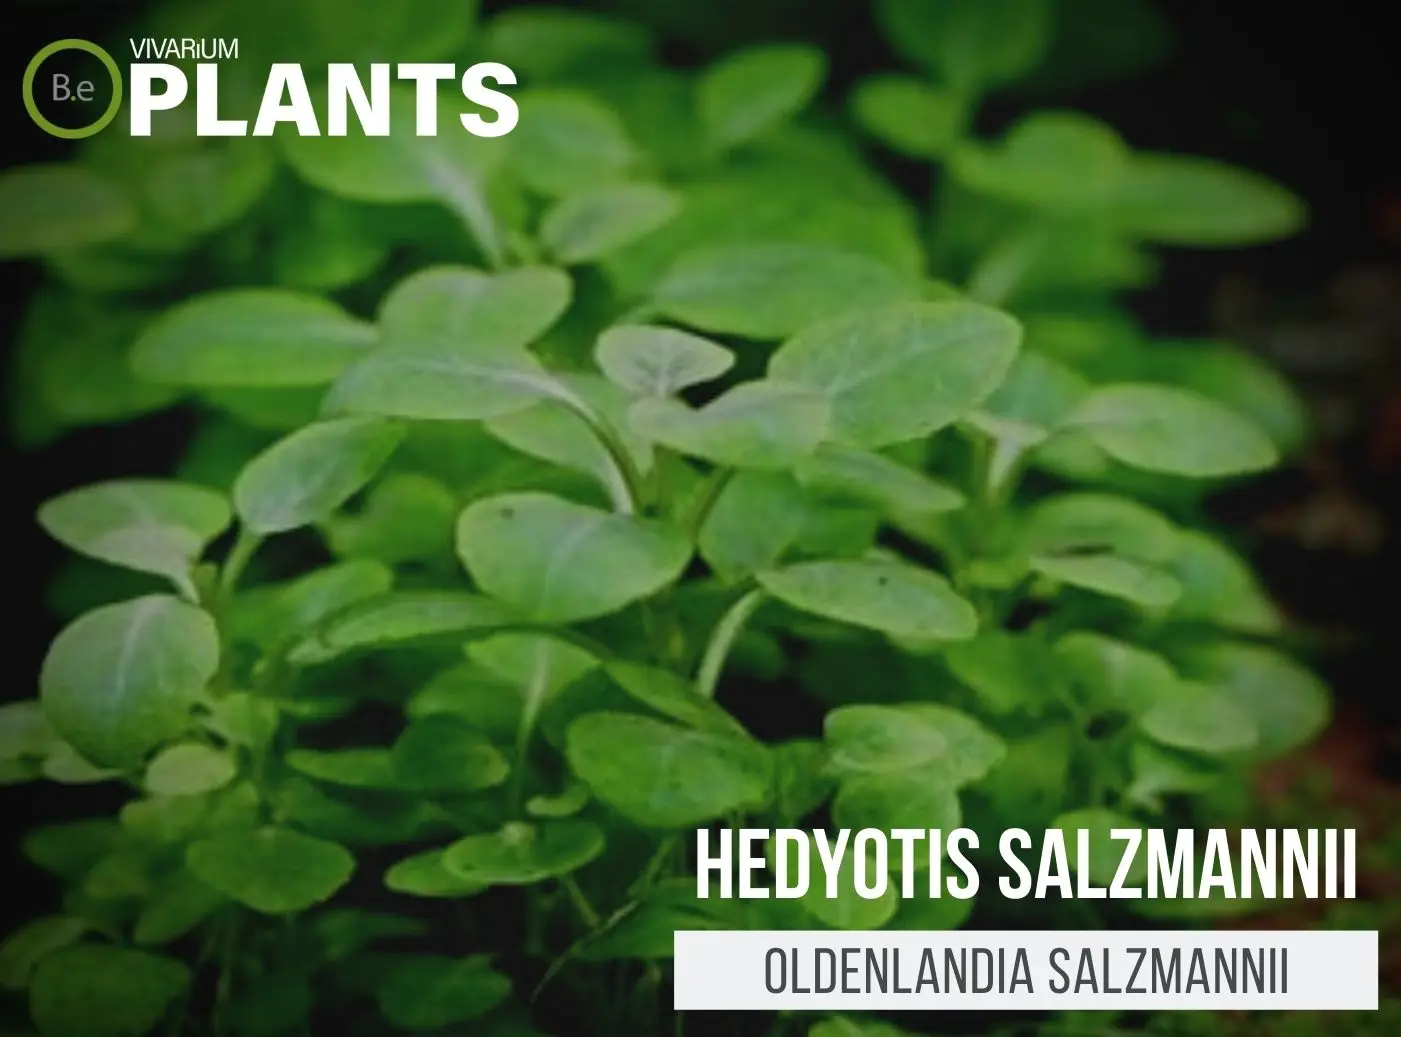 Oldenlandia salzmannii "Hedyotis Salzmannii" Plant Care Guide